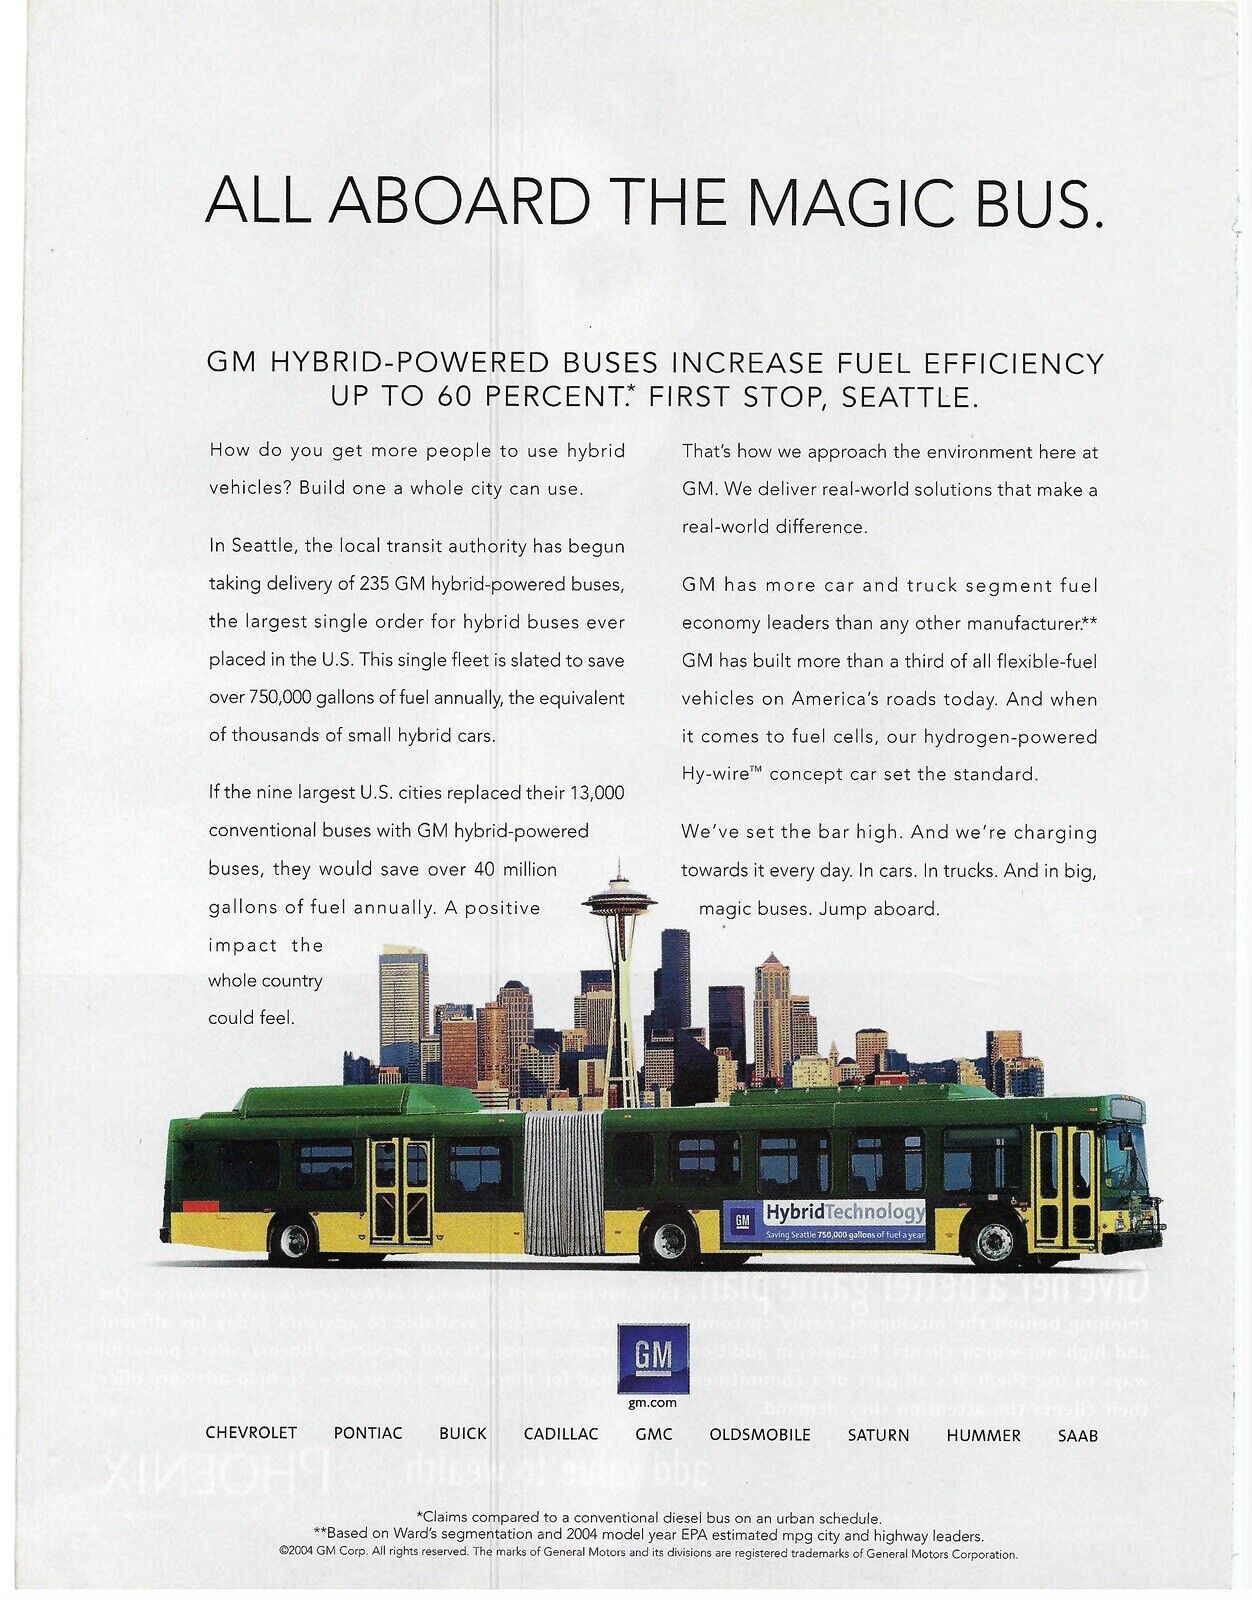 2004 GM General Motors All Aboard The Magic Bus Hybrid Retro Print Ad/Poster